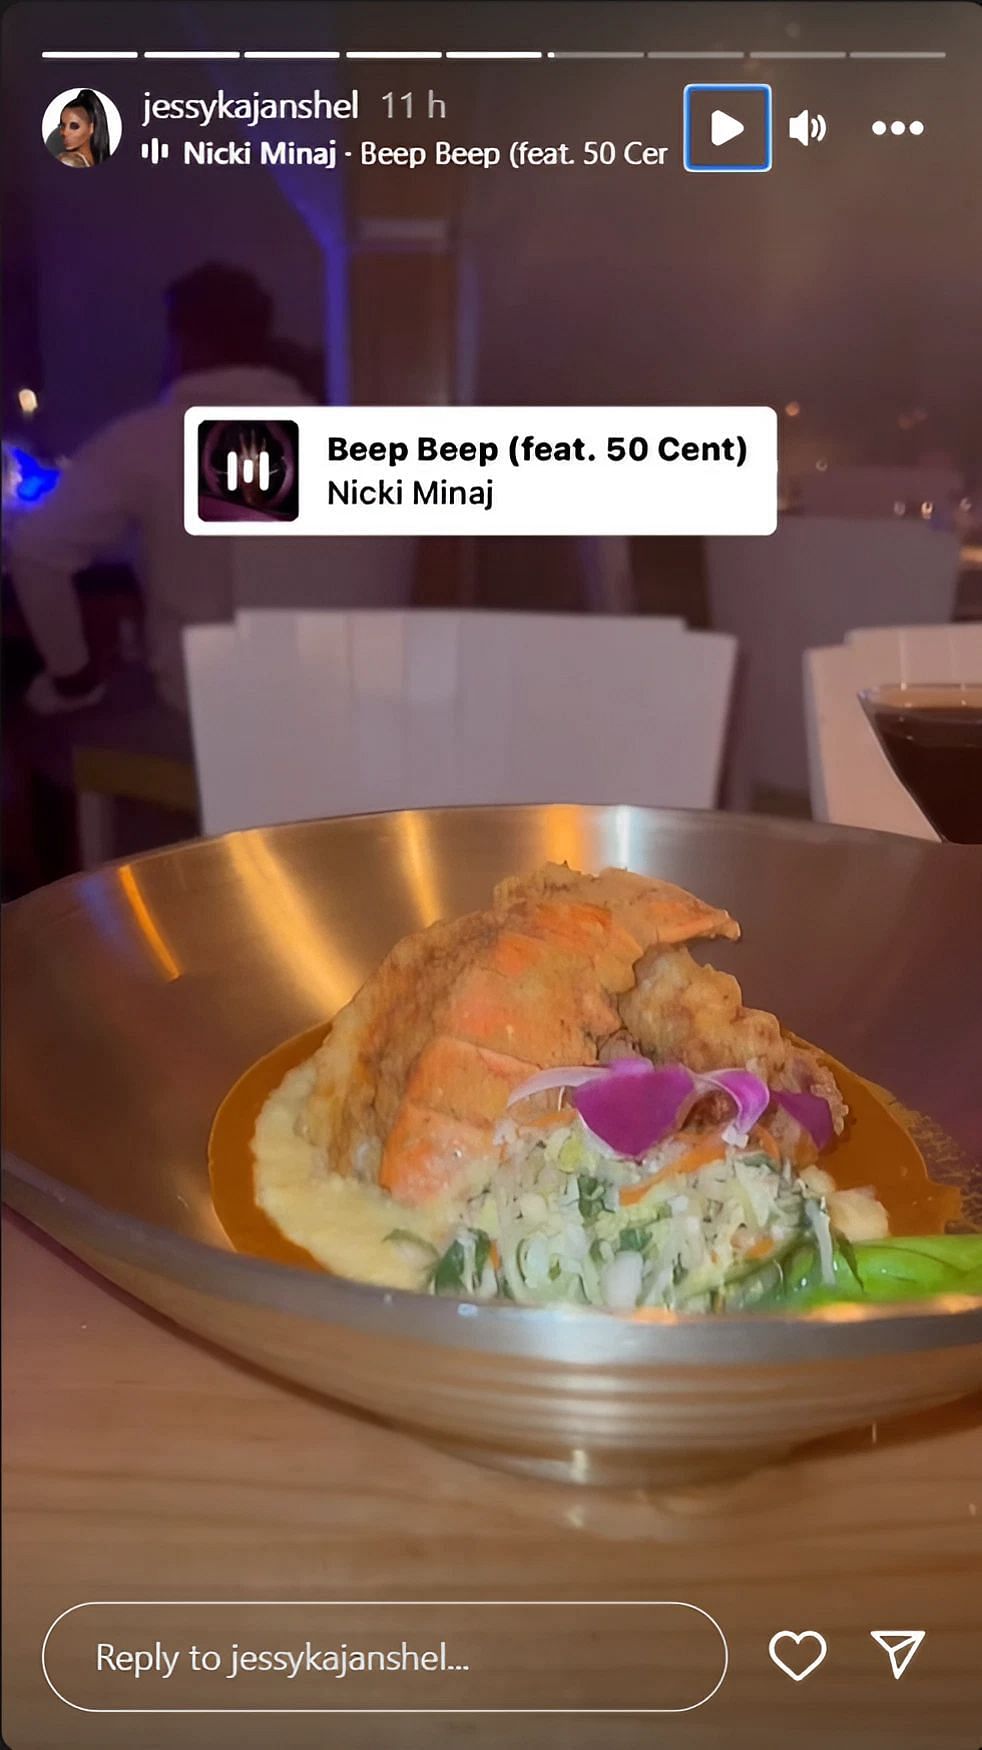 Jessyka Janshel vibing on song Beep Beep(feat. 50 Cent) by Nicki Minaj